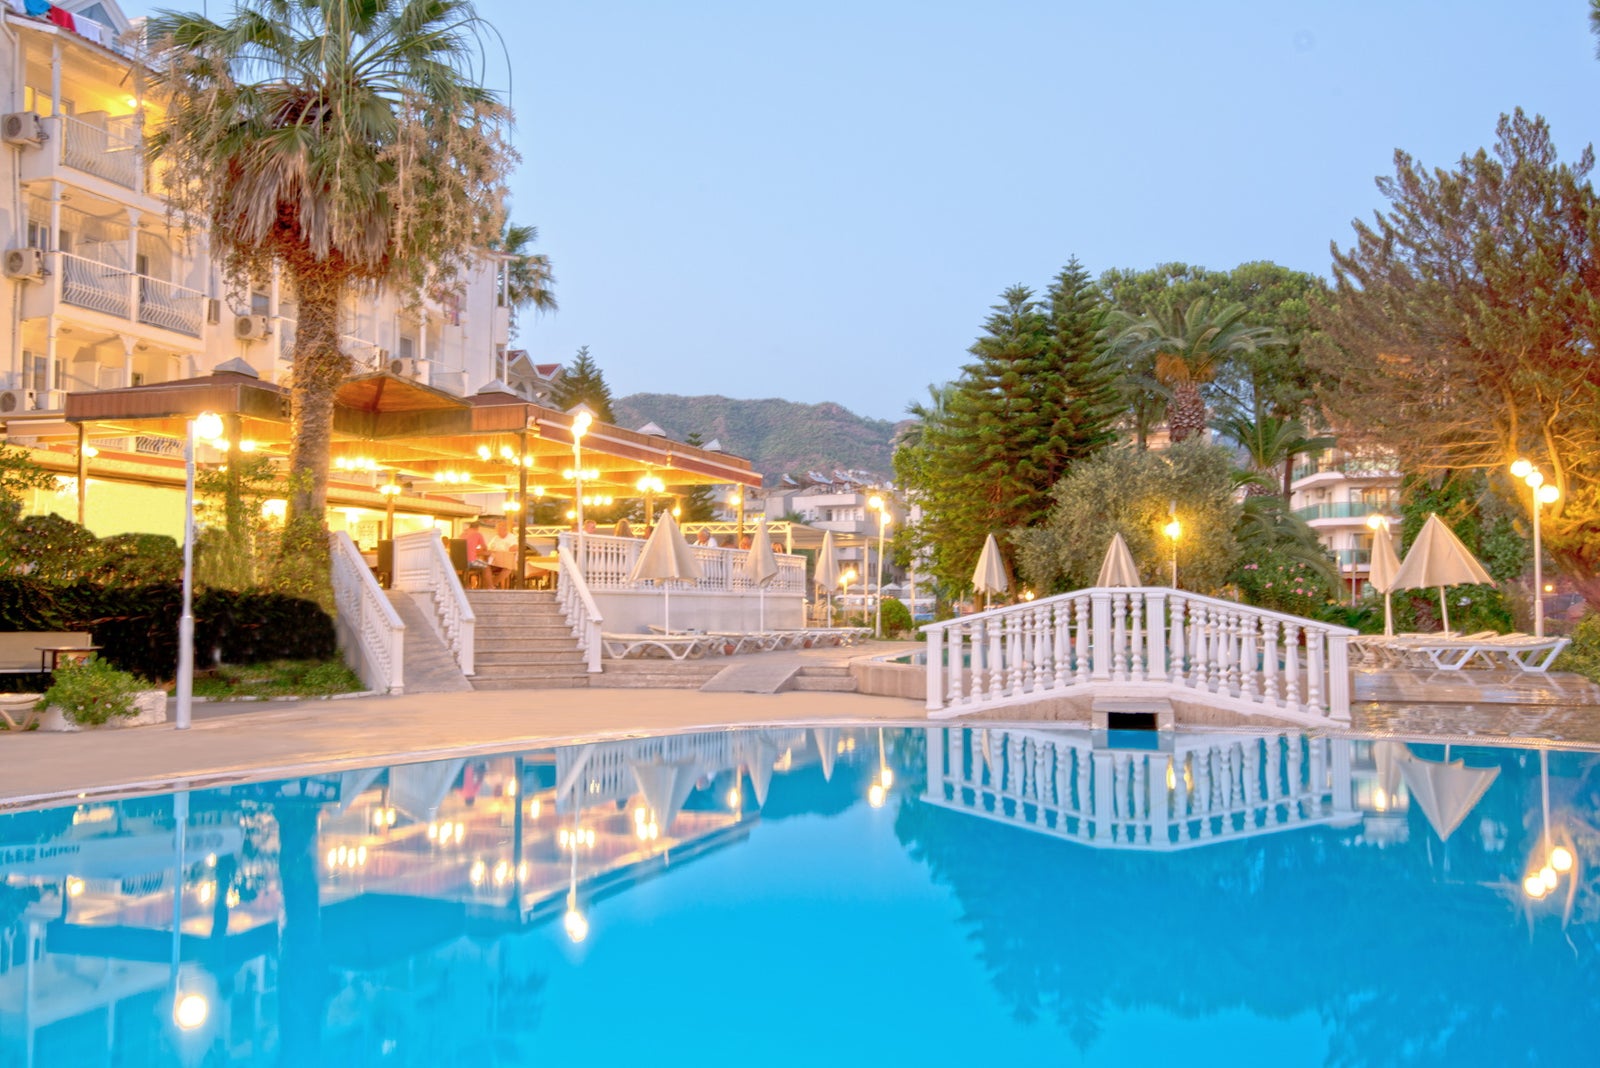 Halici Hotel in Marmaris, Turkey Holidays from £204pp loveholidays